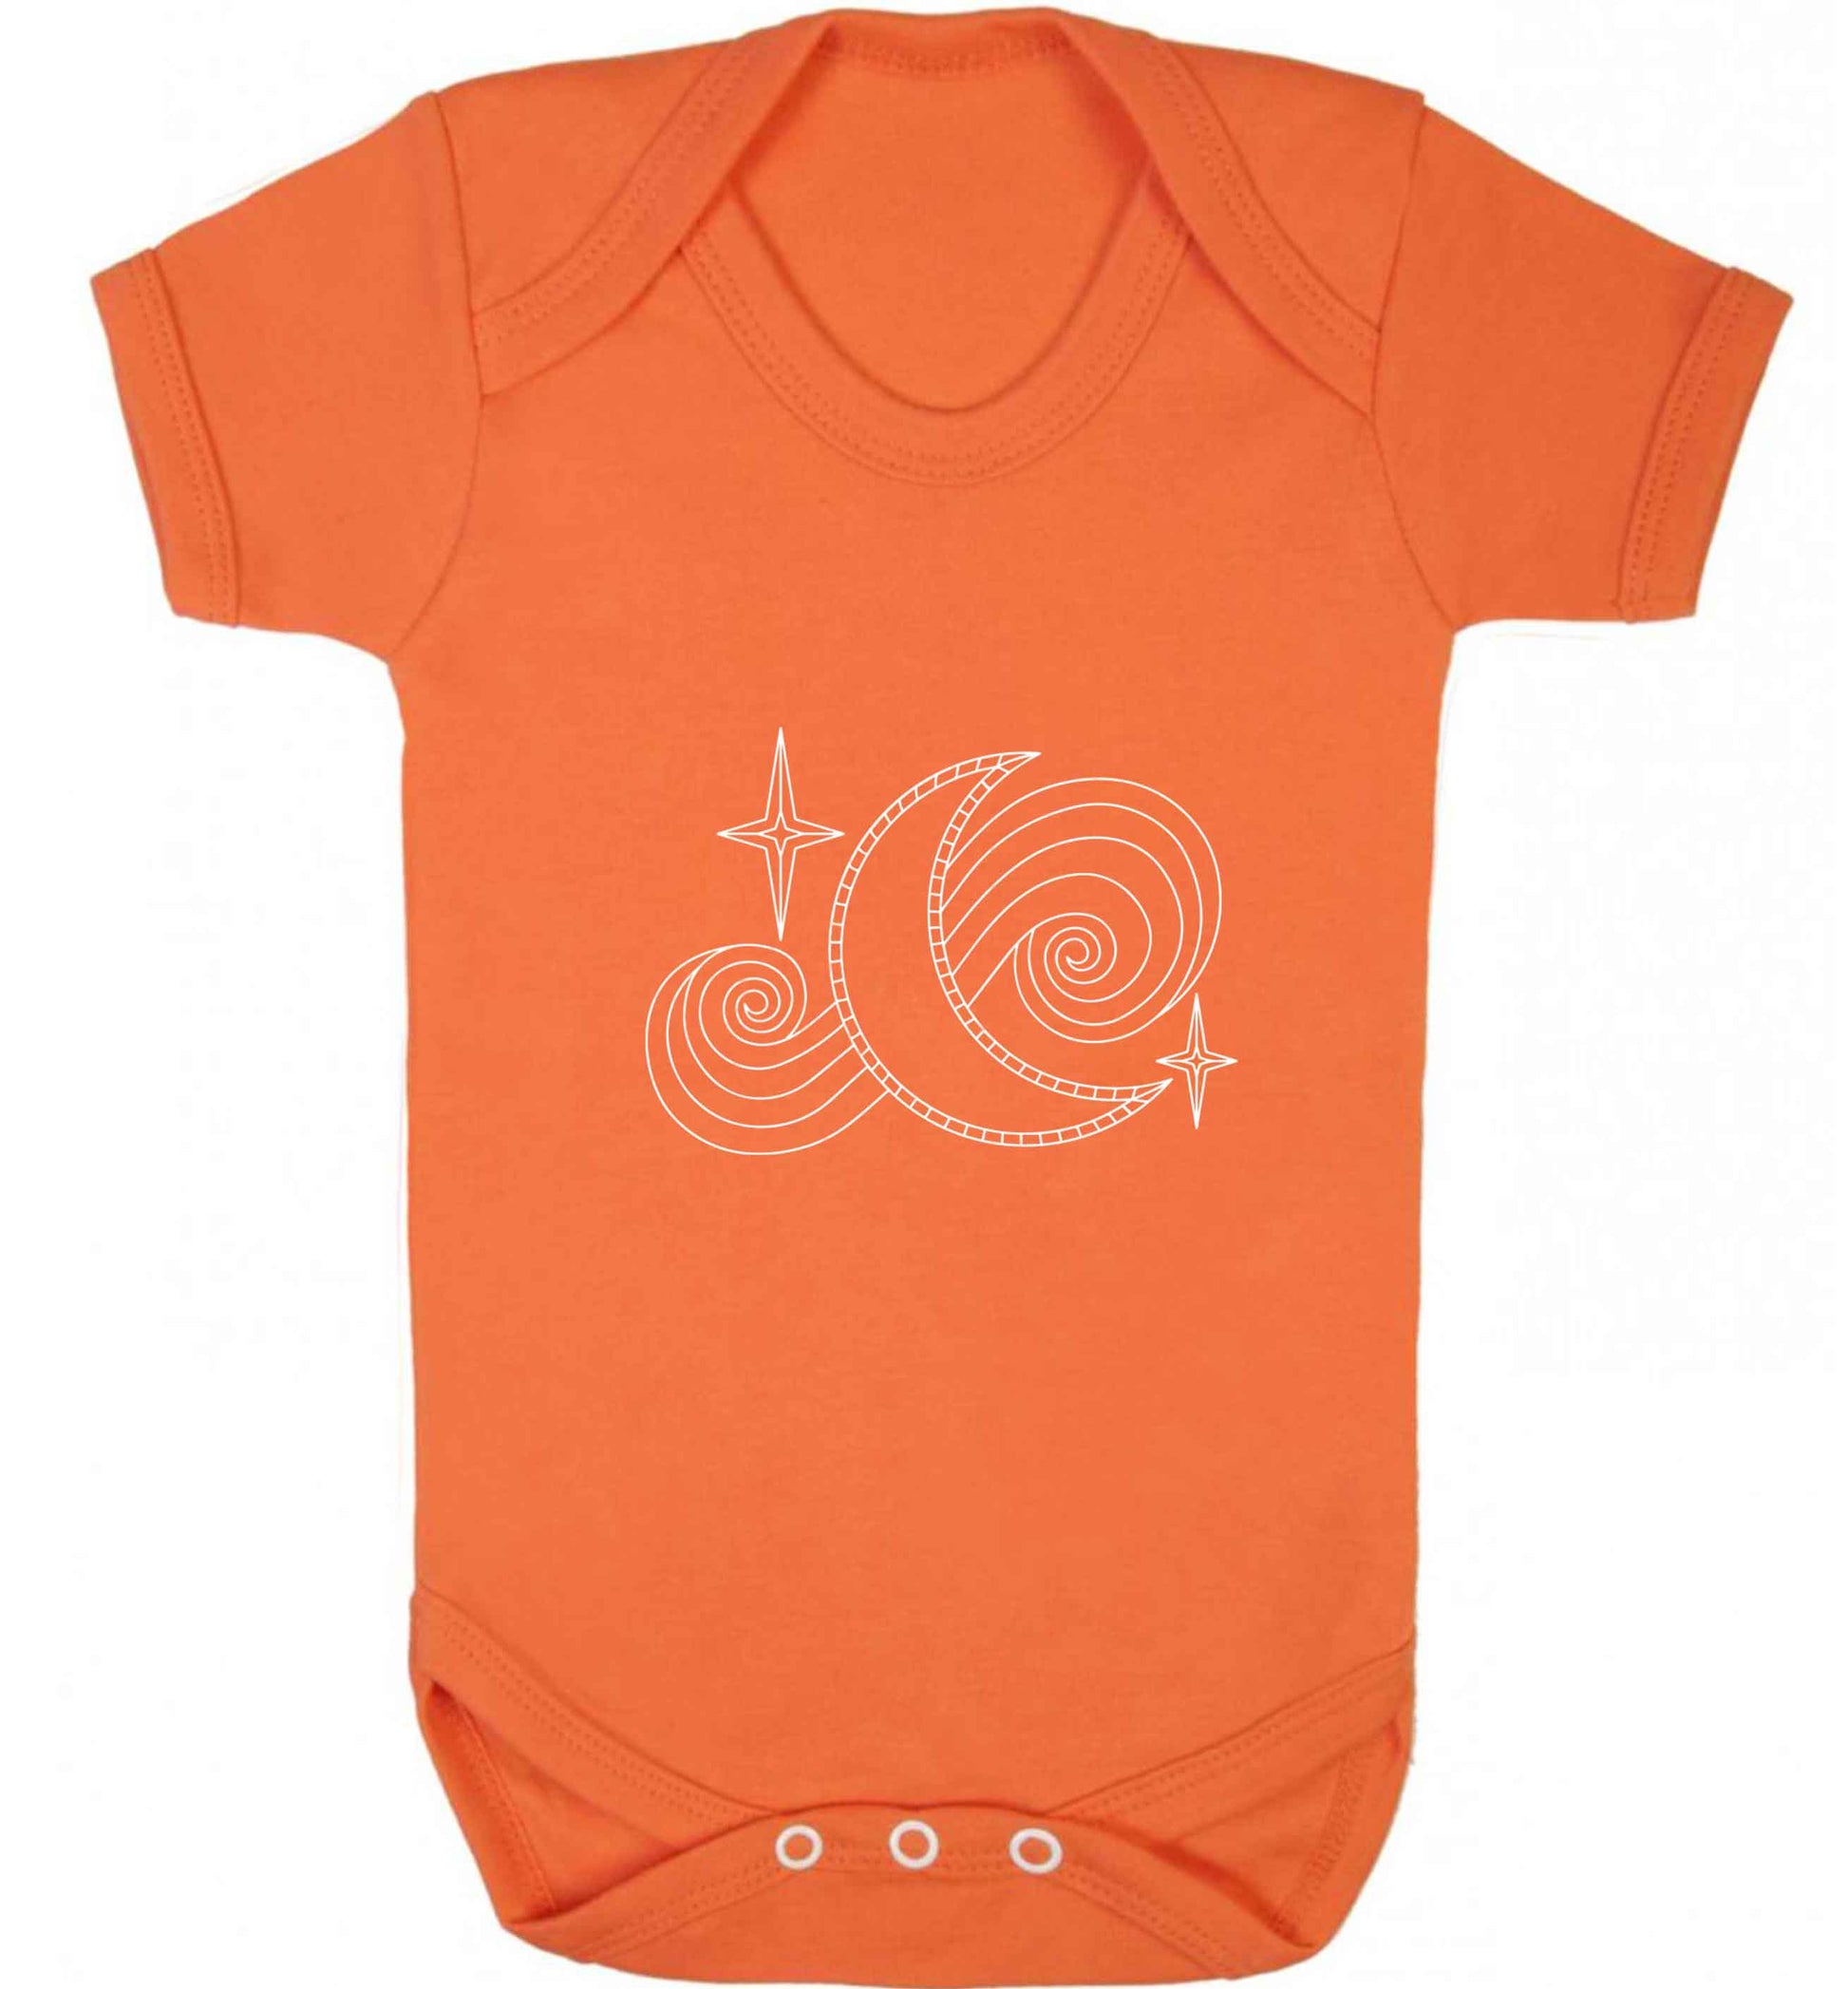 Moon and stars illustration baby vest orange 18-24 months